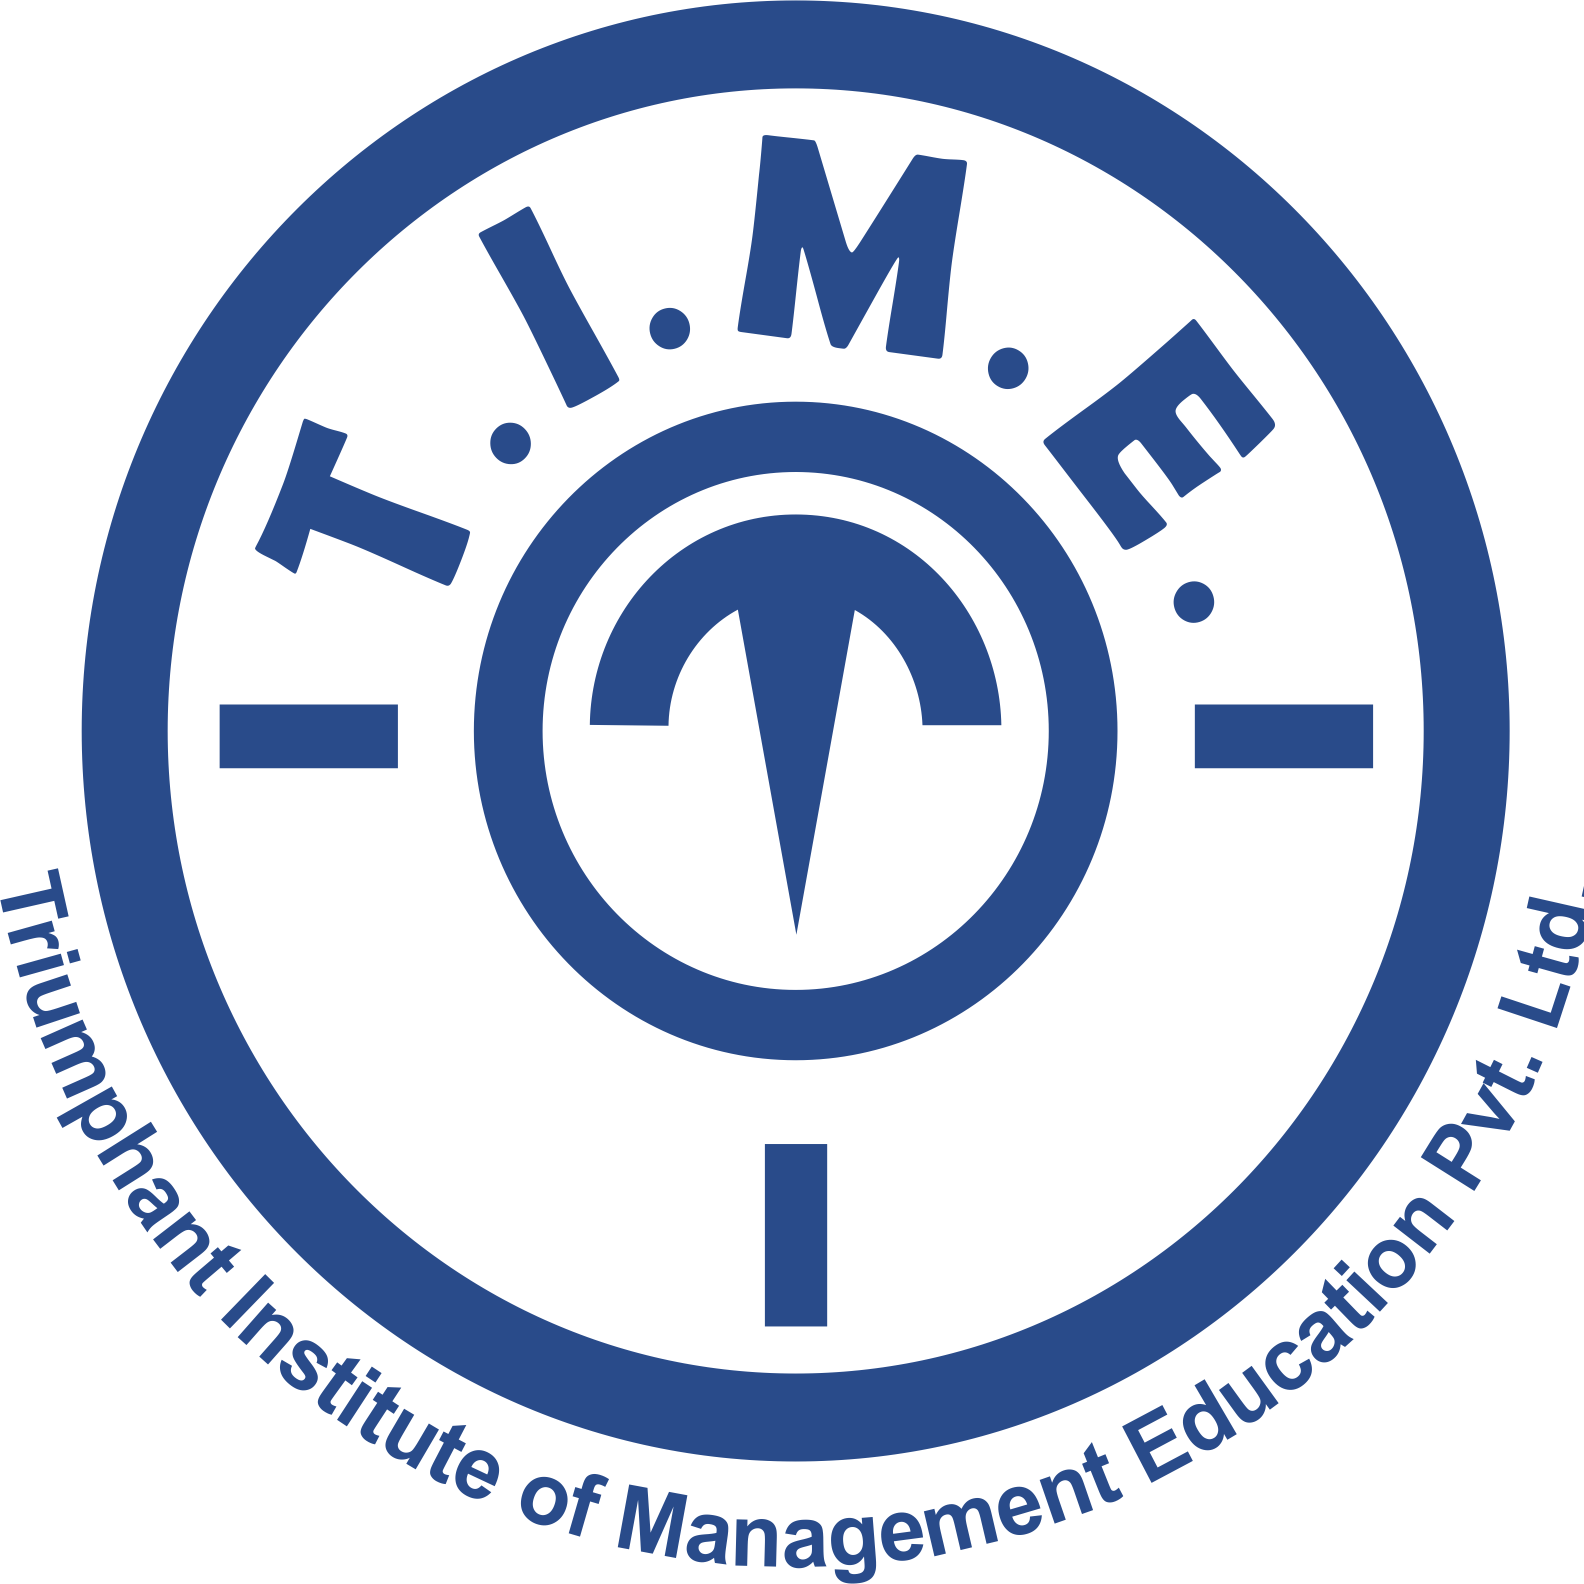 T.I.M.E.-Triumphant Institute of Management Education